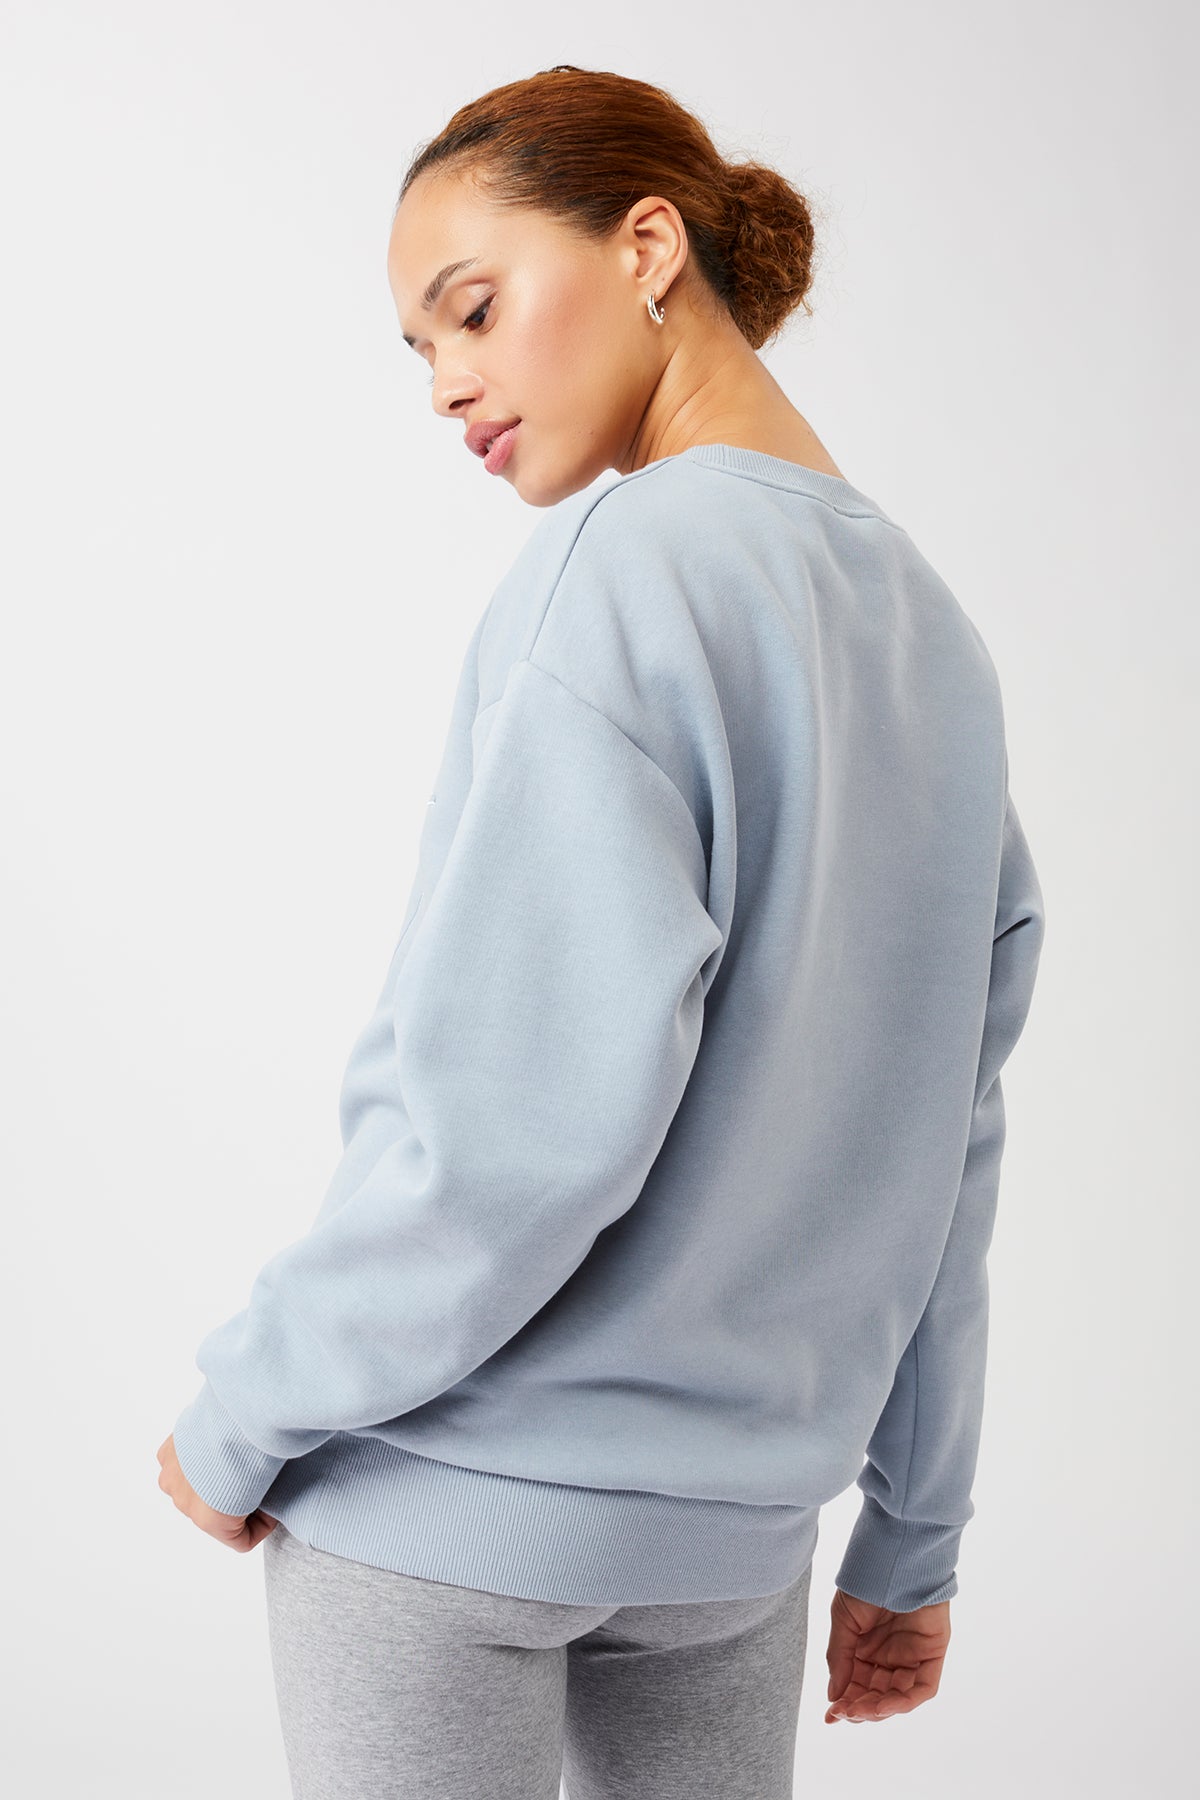 Mandala Yoga Pullover Graublau Rückseite - Peace Sweater